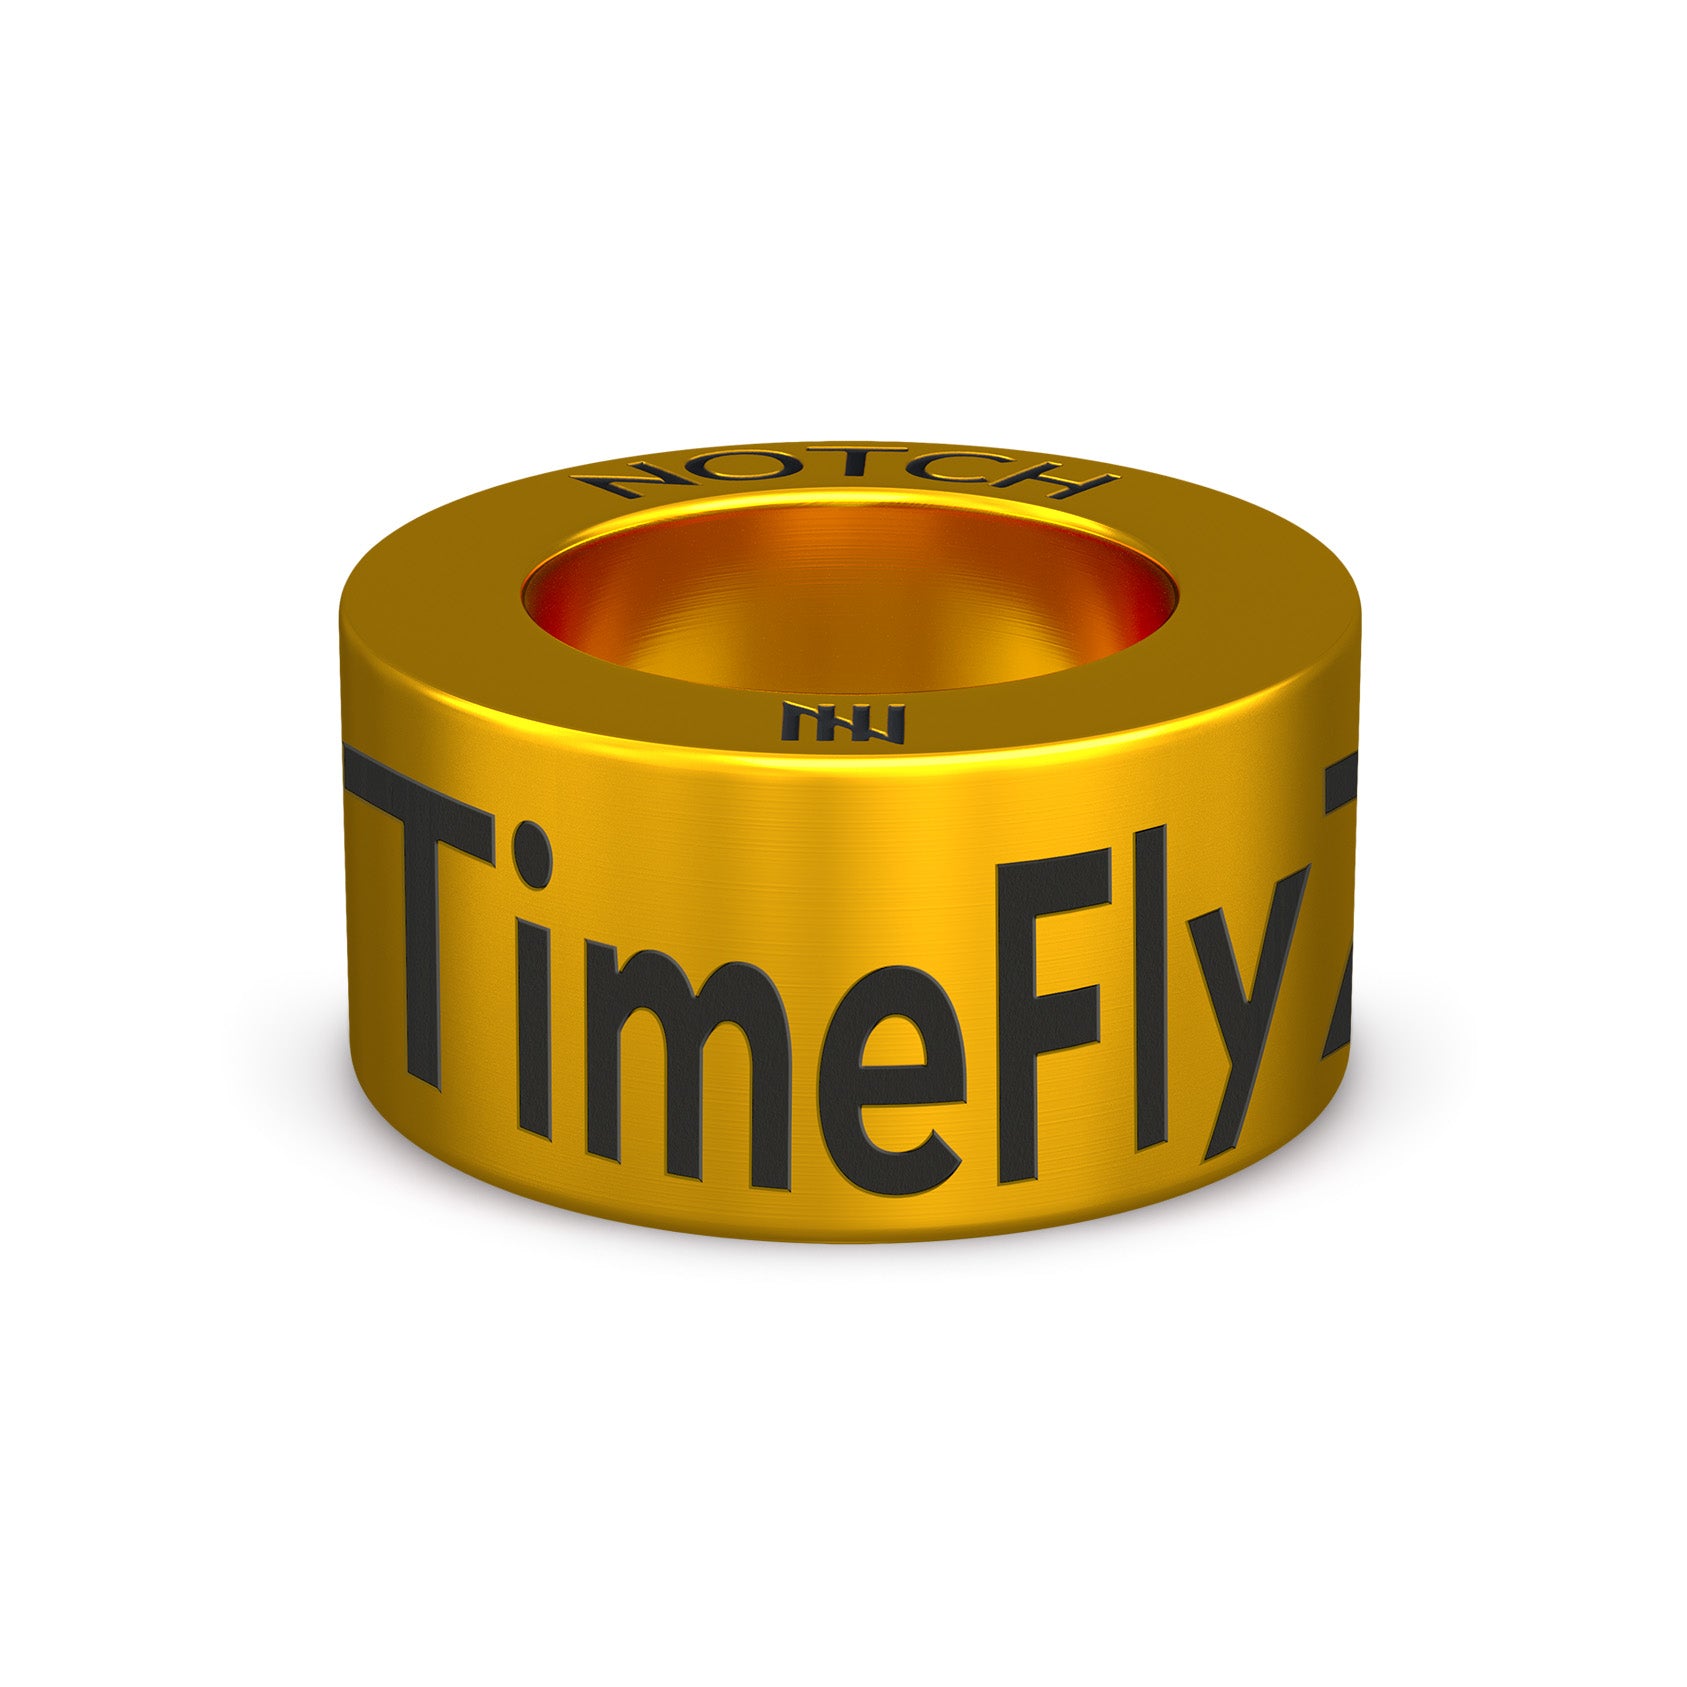 TimeFlyZ Flyball Team NOTCH Charm